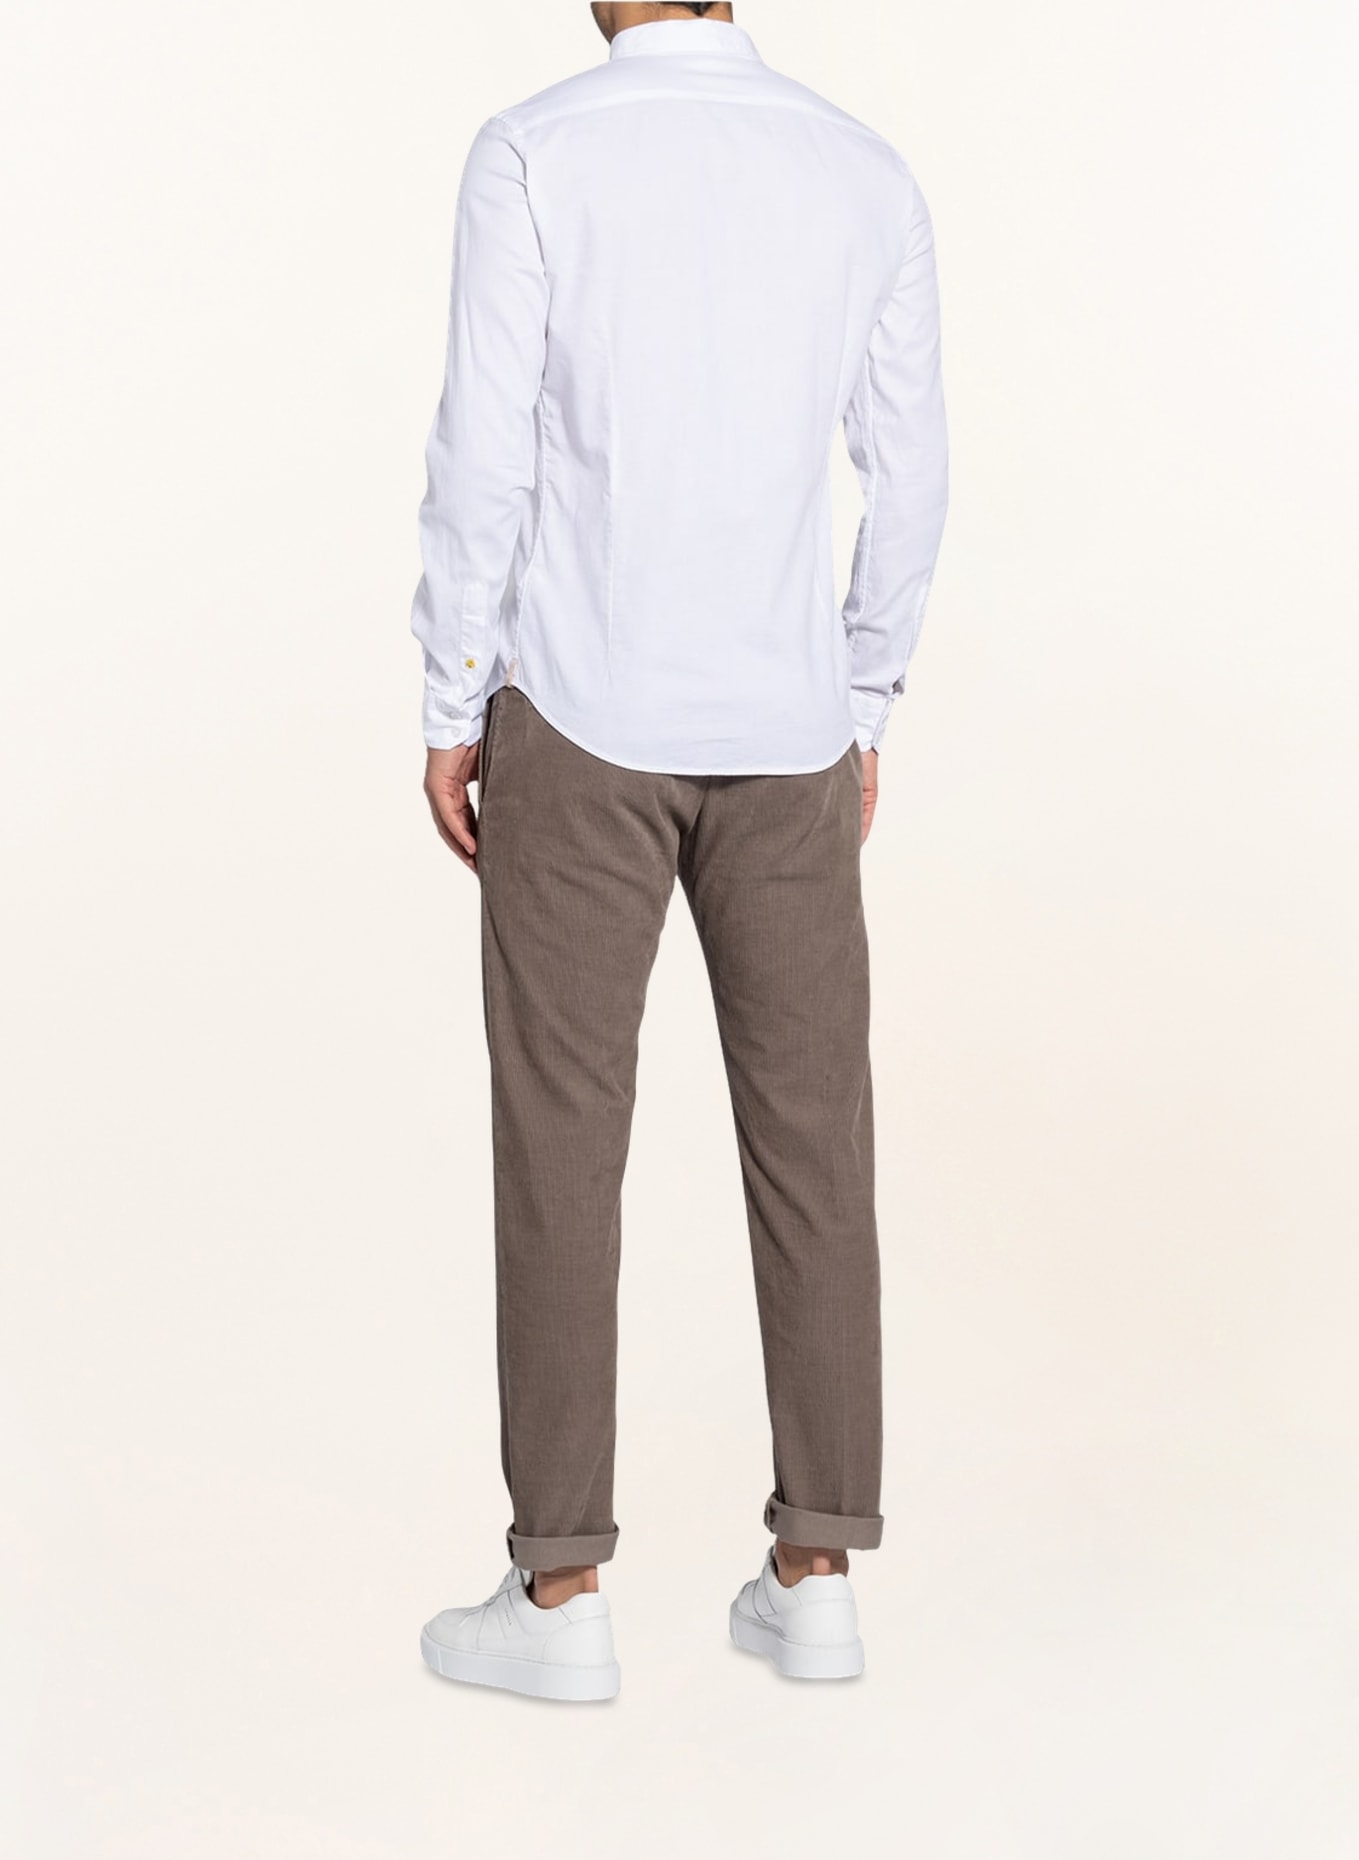 Q1 Manufaktur Hemd Extra Slim Fit, Farbe: WEISS (Bild 3)